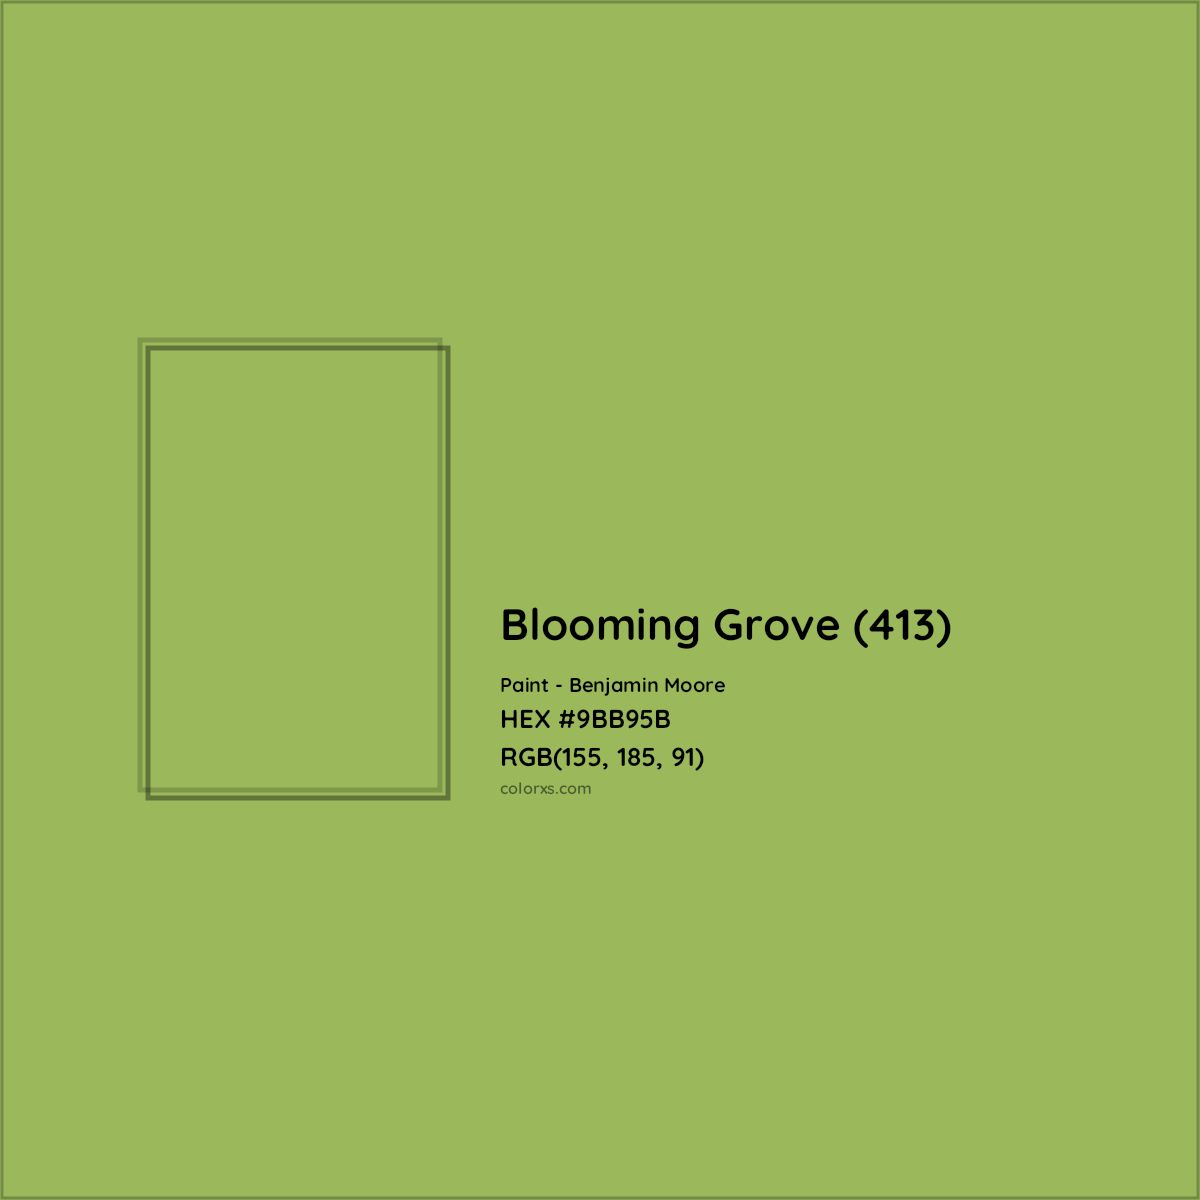 HEX #9BB95B Blooming Grove (413) Paint Benjamin Moore - Color Code